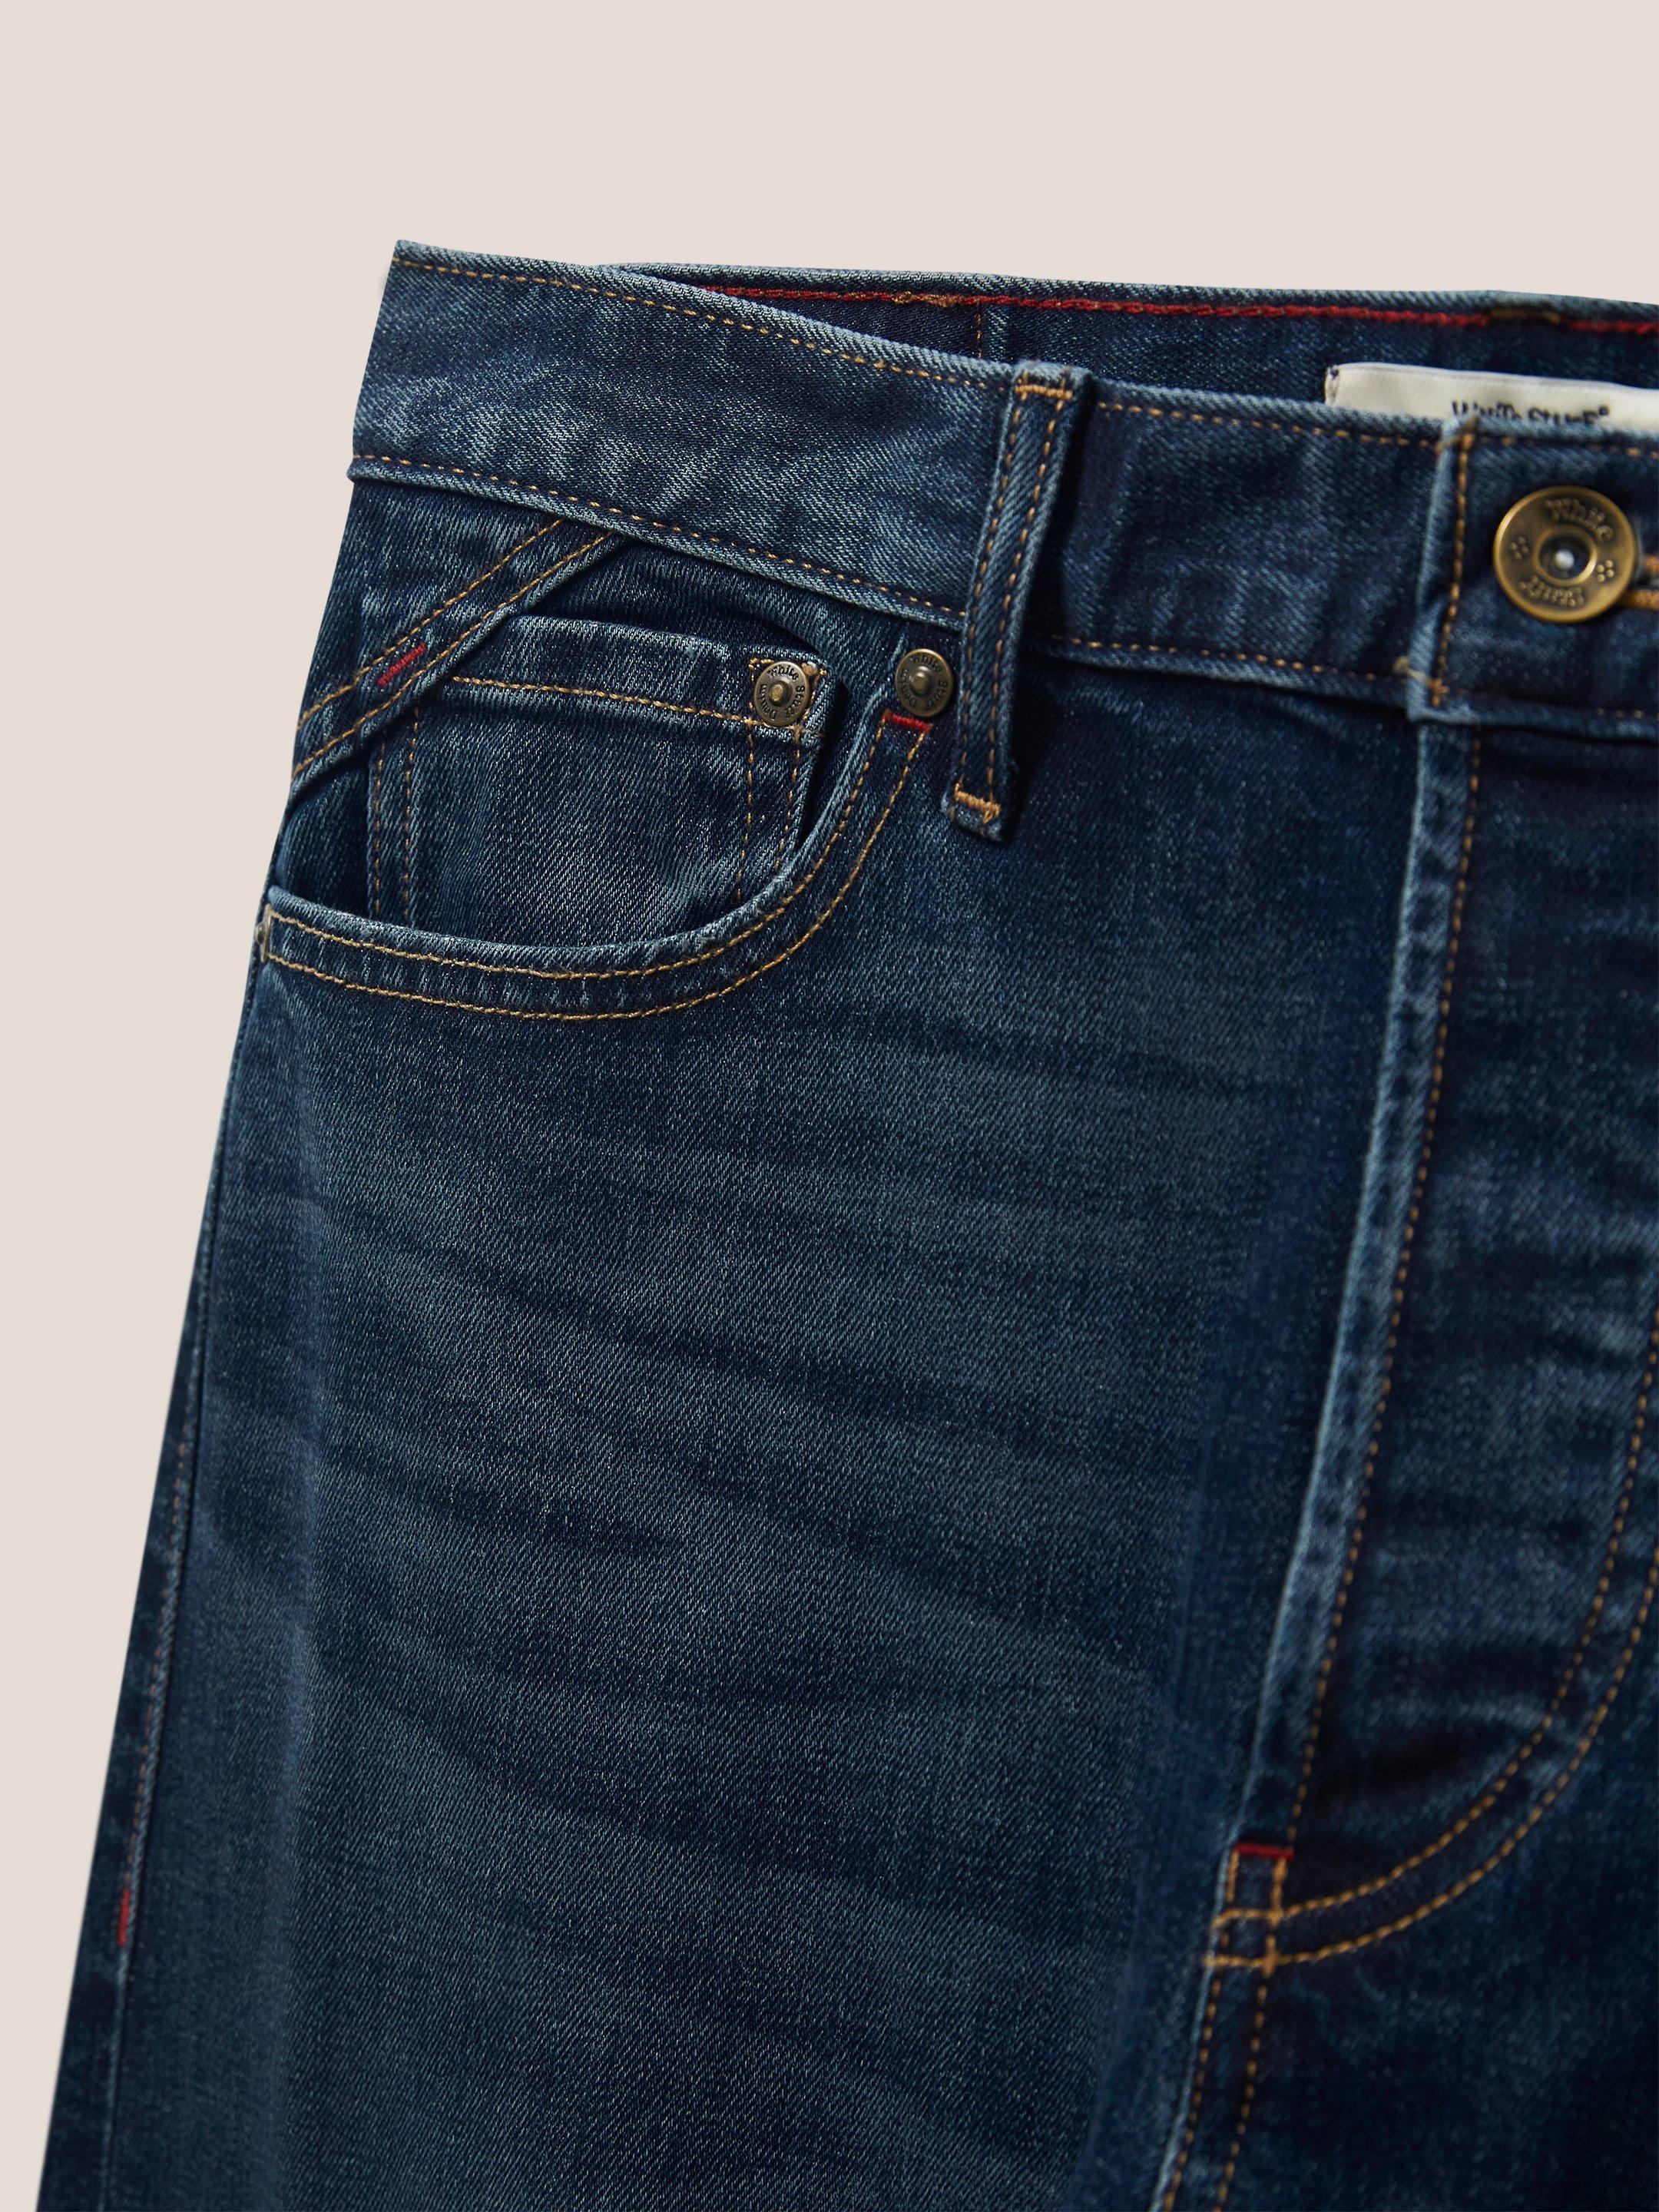 Harwood Straight Jean in DK BLUE - FLAT DETAIL